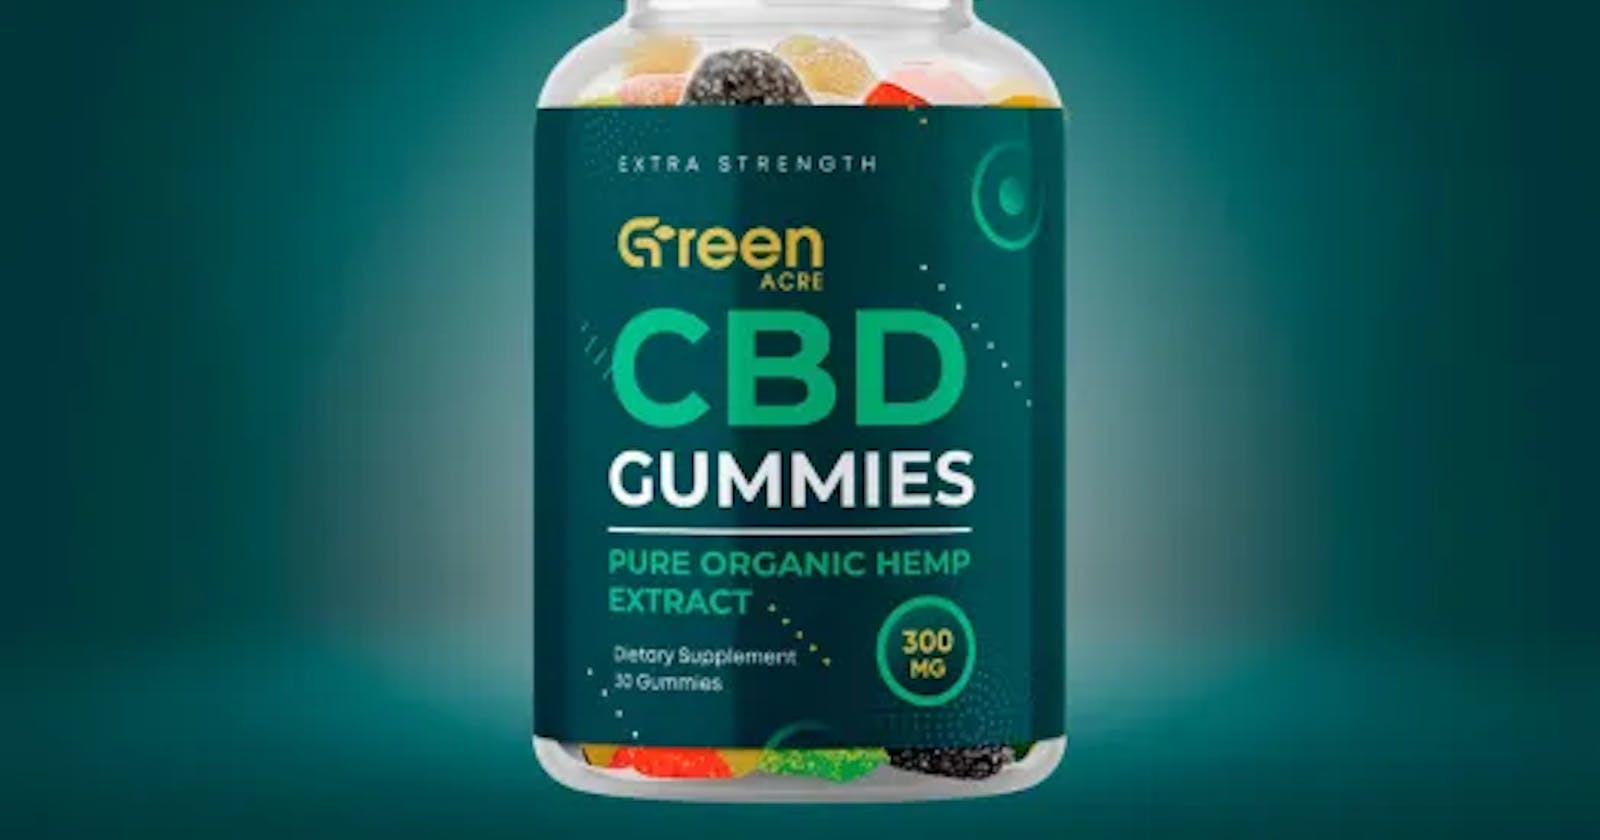 Green Acre CBD Gummies Review Benefits (Cannabidiol Formula) Beware Before Buying!